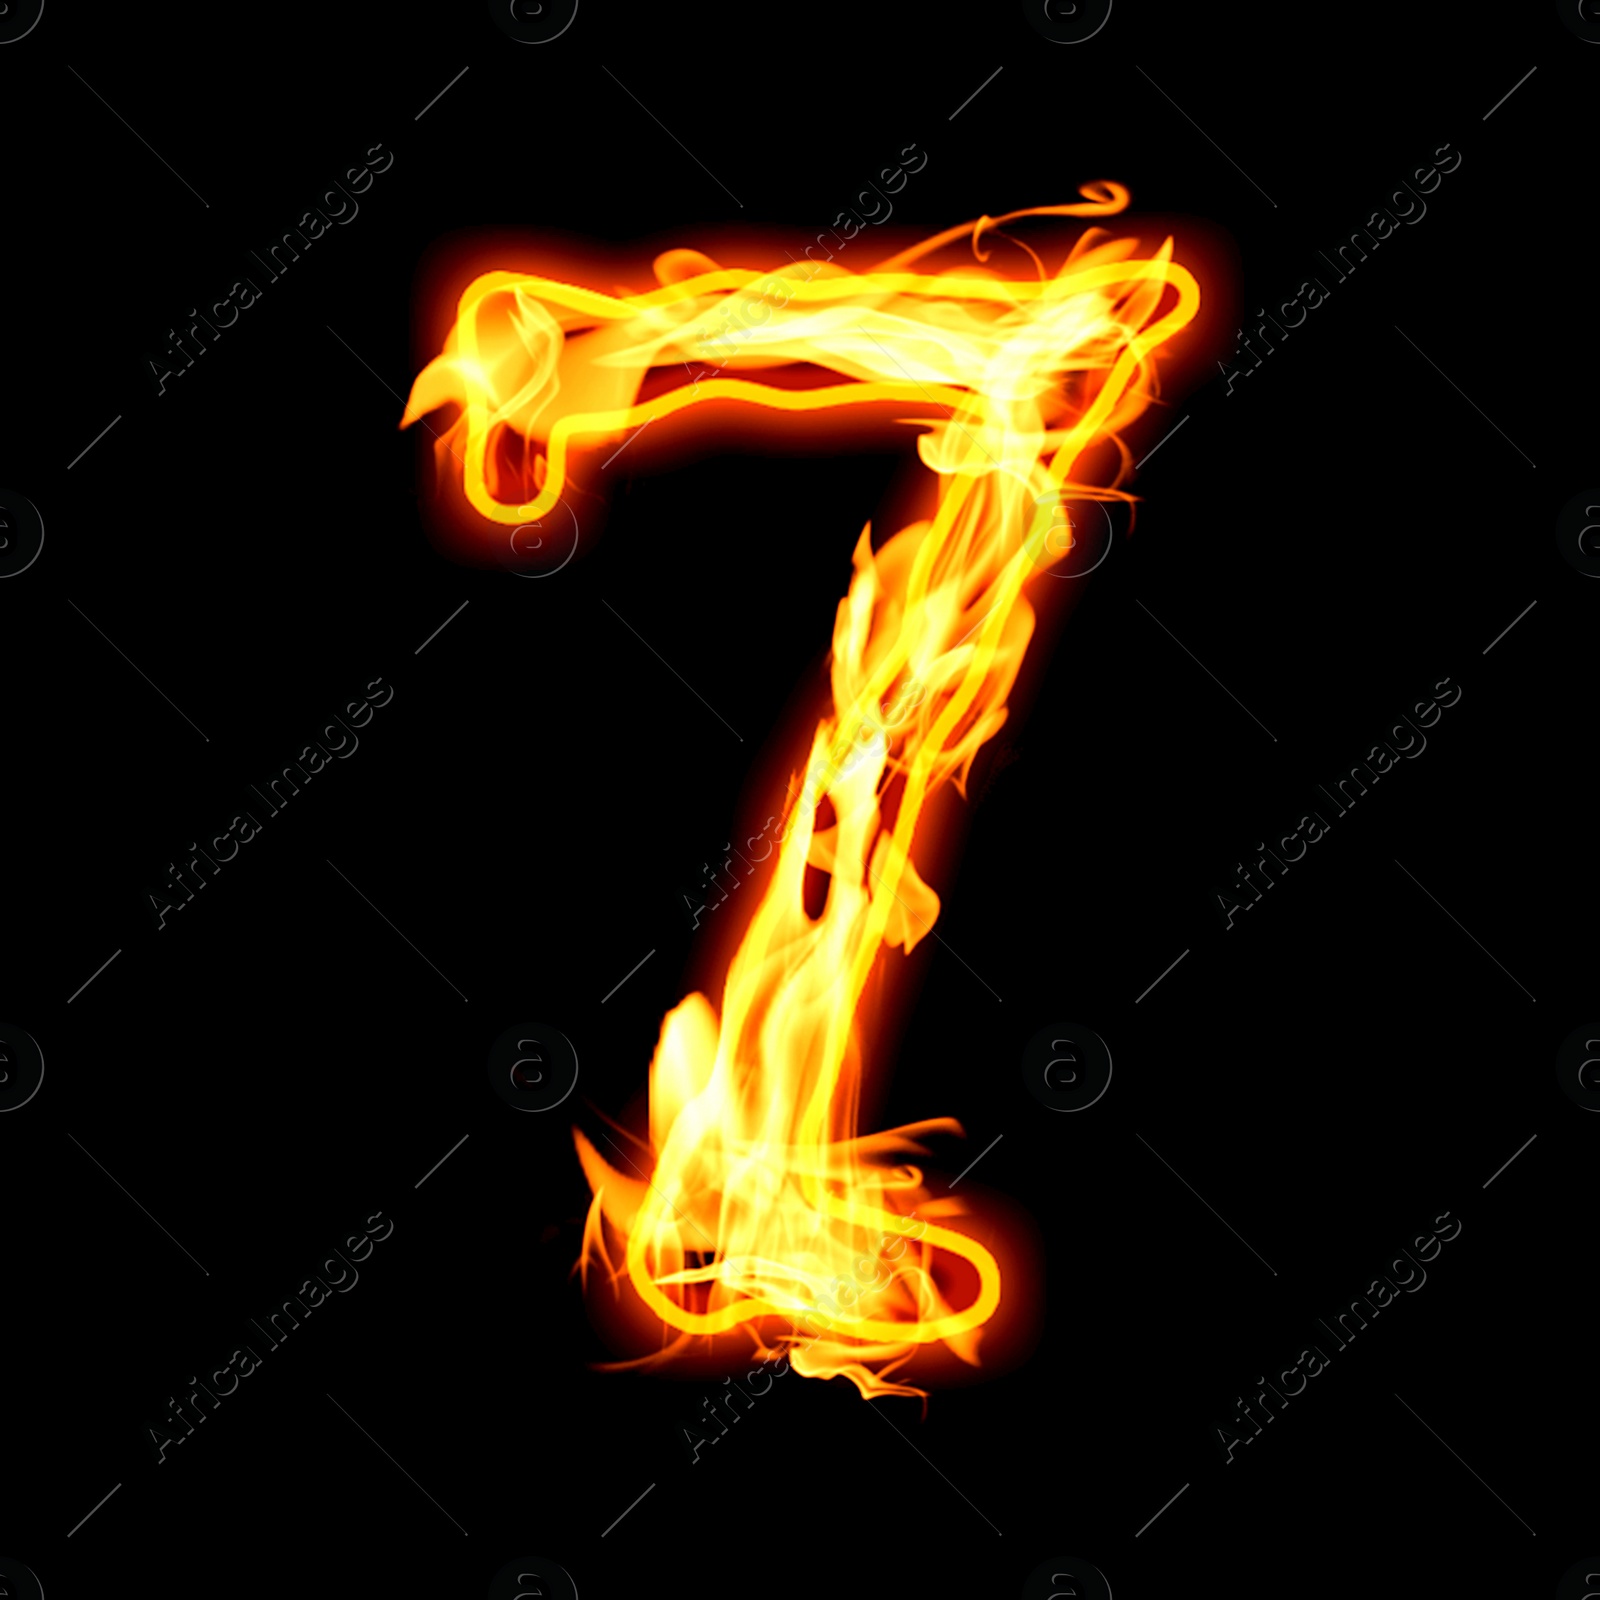 Image of Flaming 7 on black background. Stylized number design